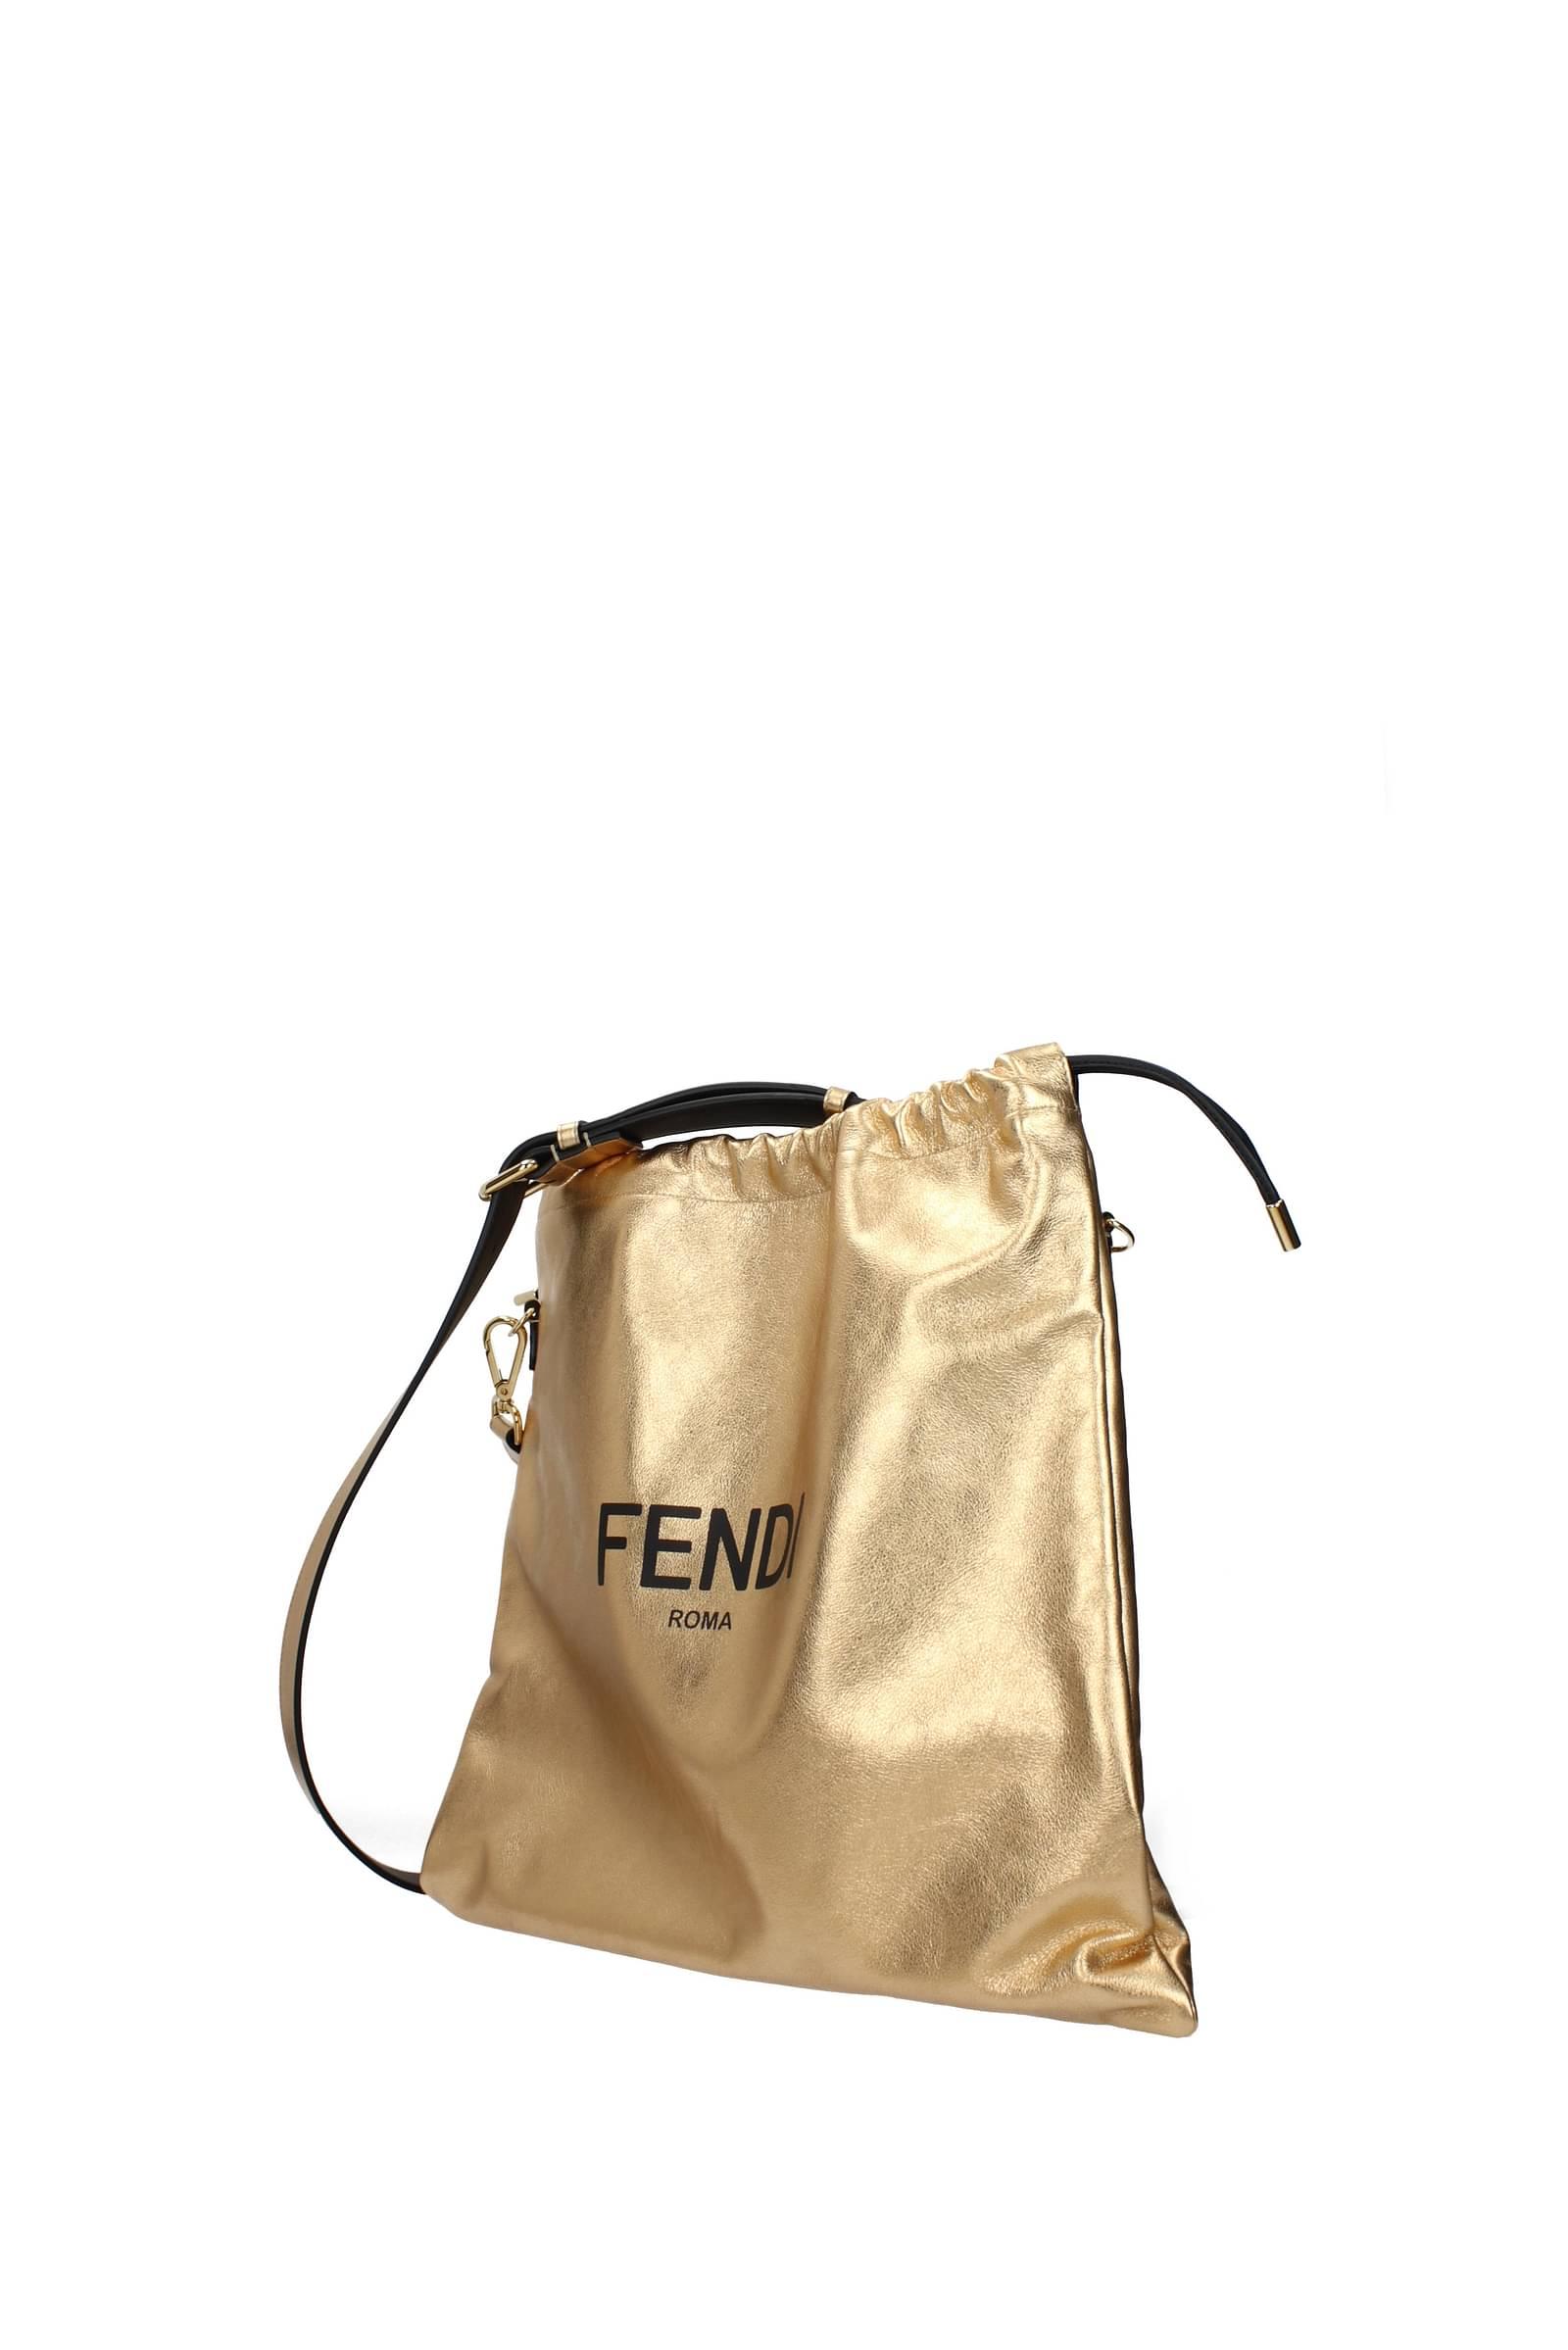 Fendi Medium FF Karligraphy First Bag